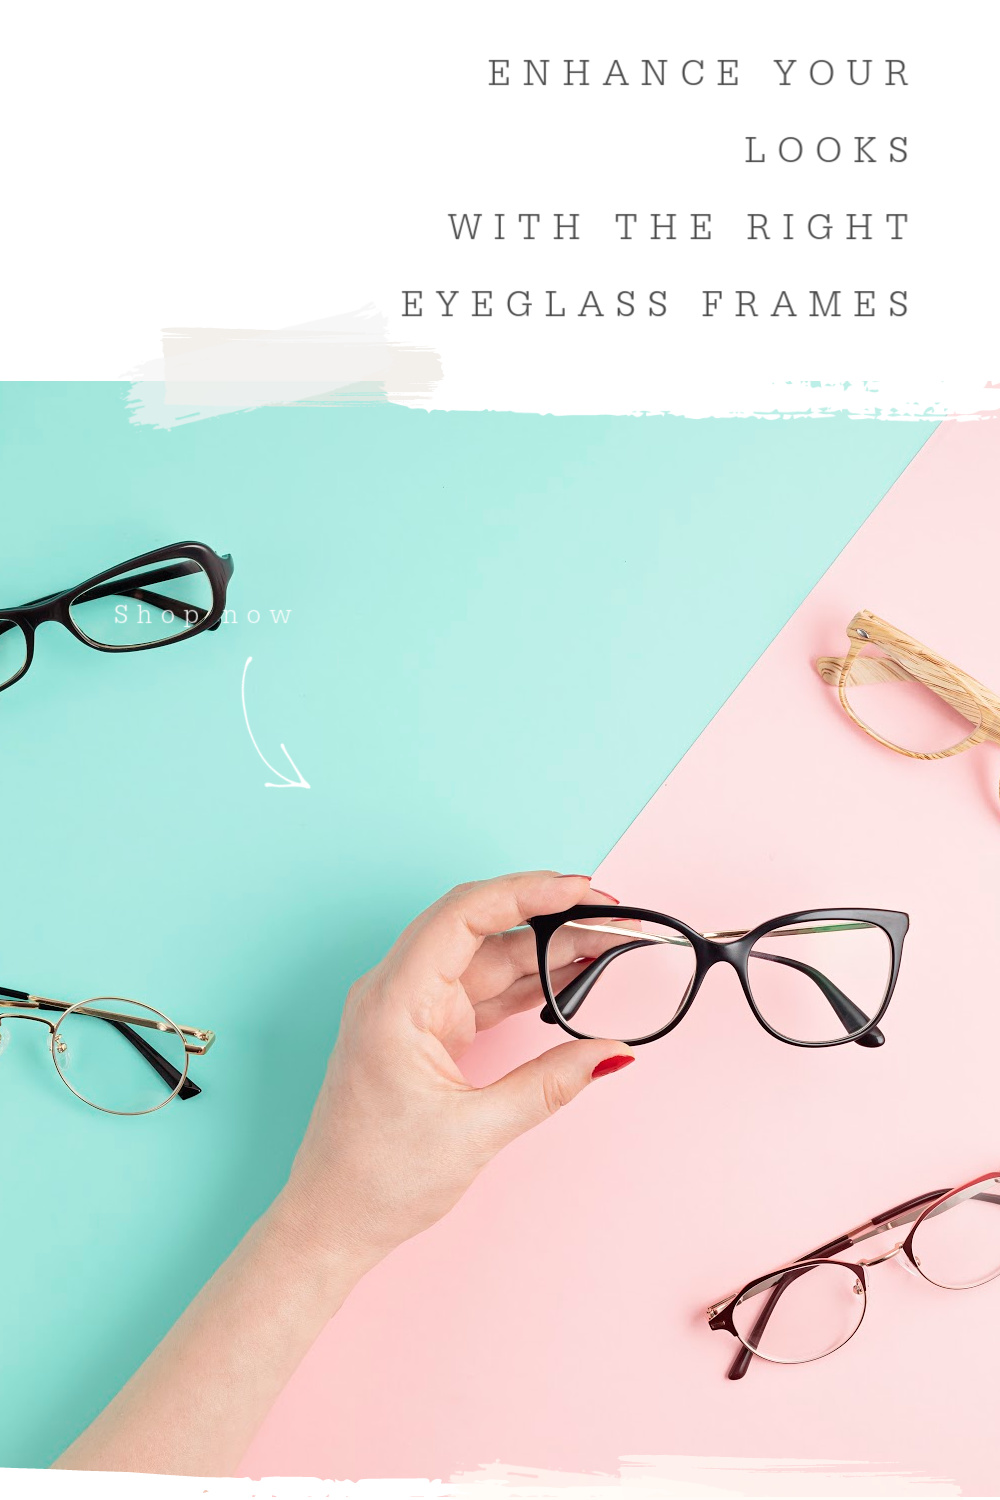 The Right Eyeglass Frames